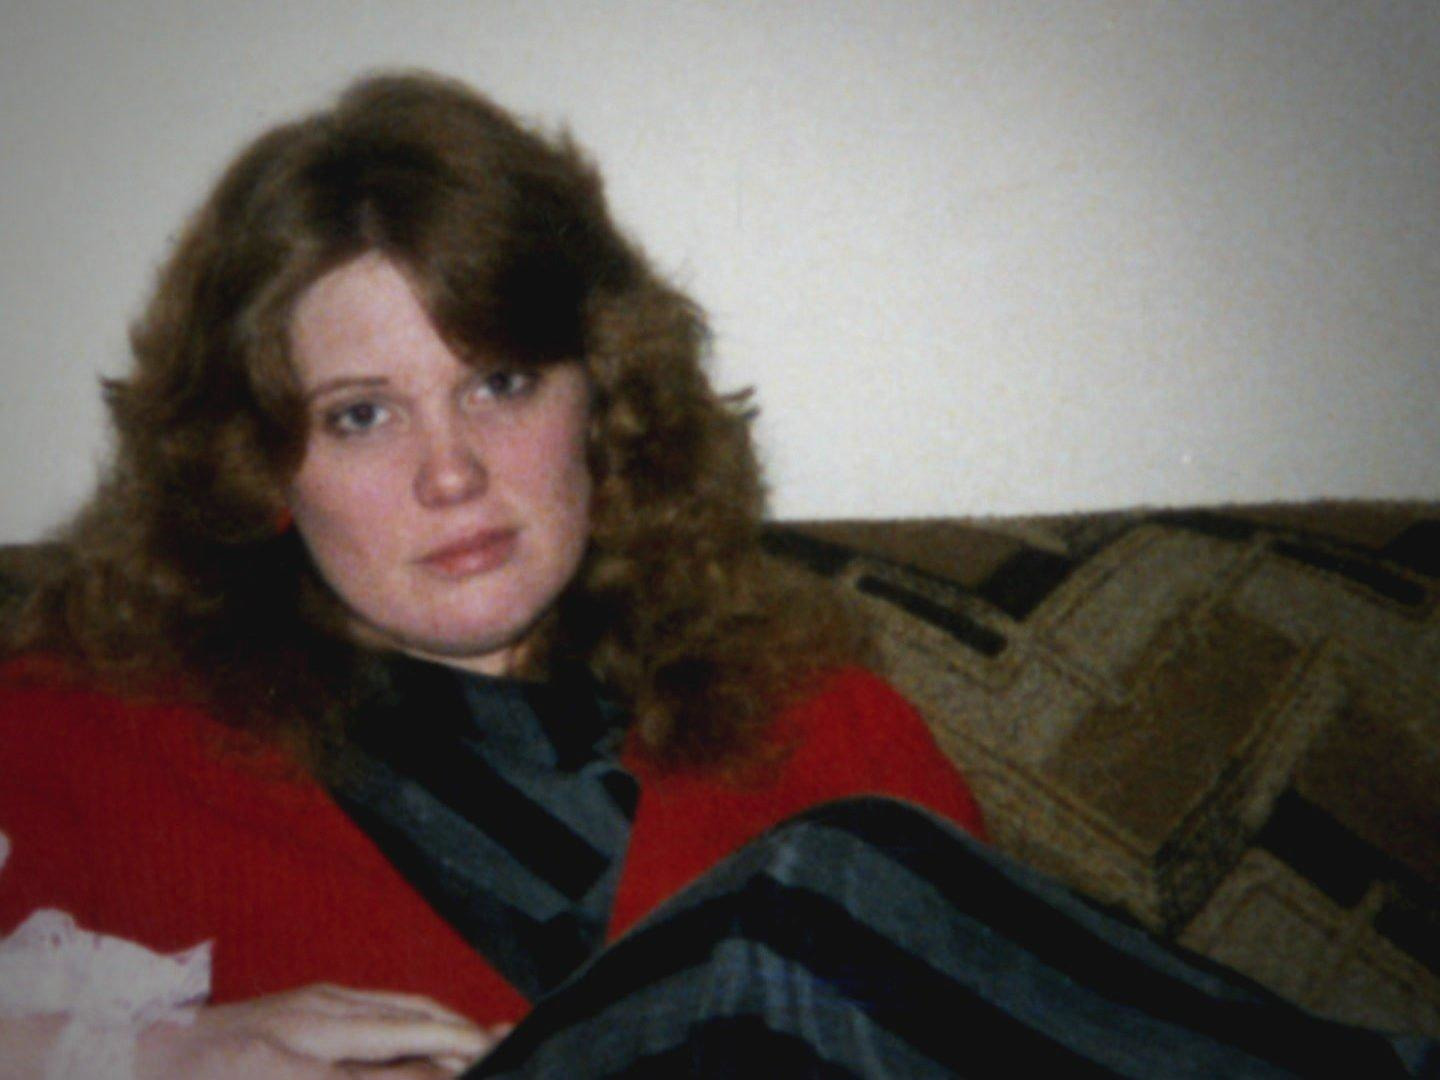 Shelly Knotek, America's "most Evil Mom" Turned Serial Killer